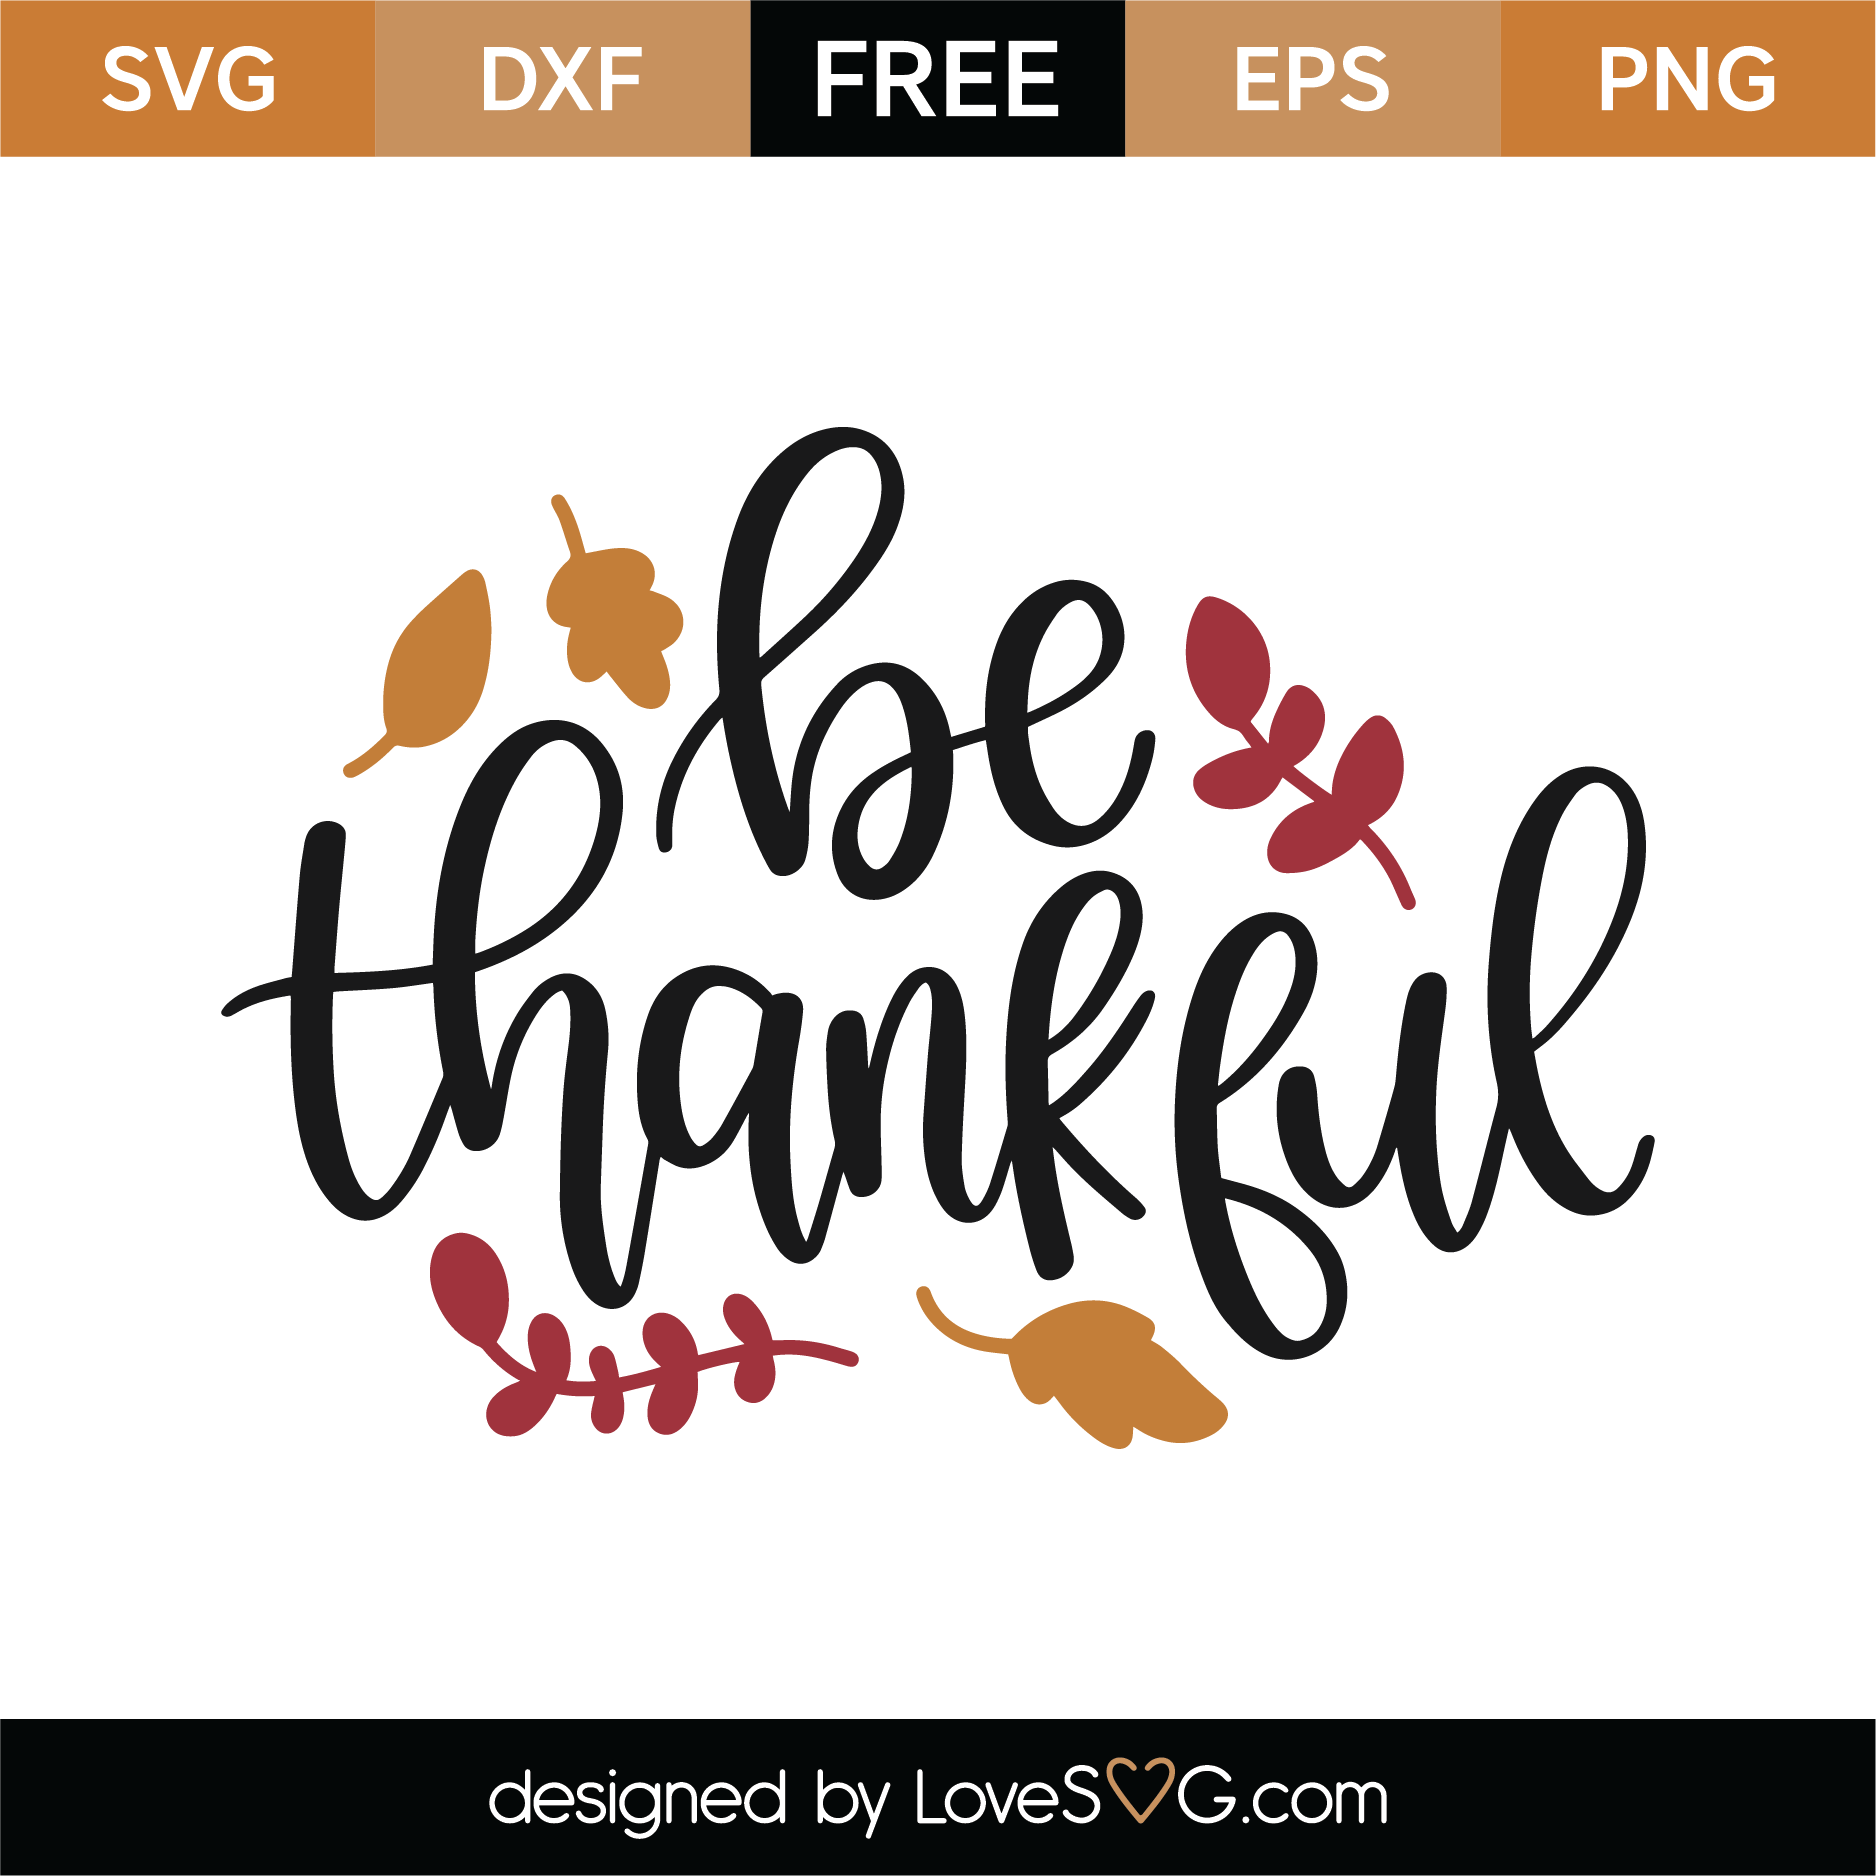 Download Free Svg Thankful / Thankful SVG | DigitalistDesigns ...